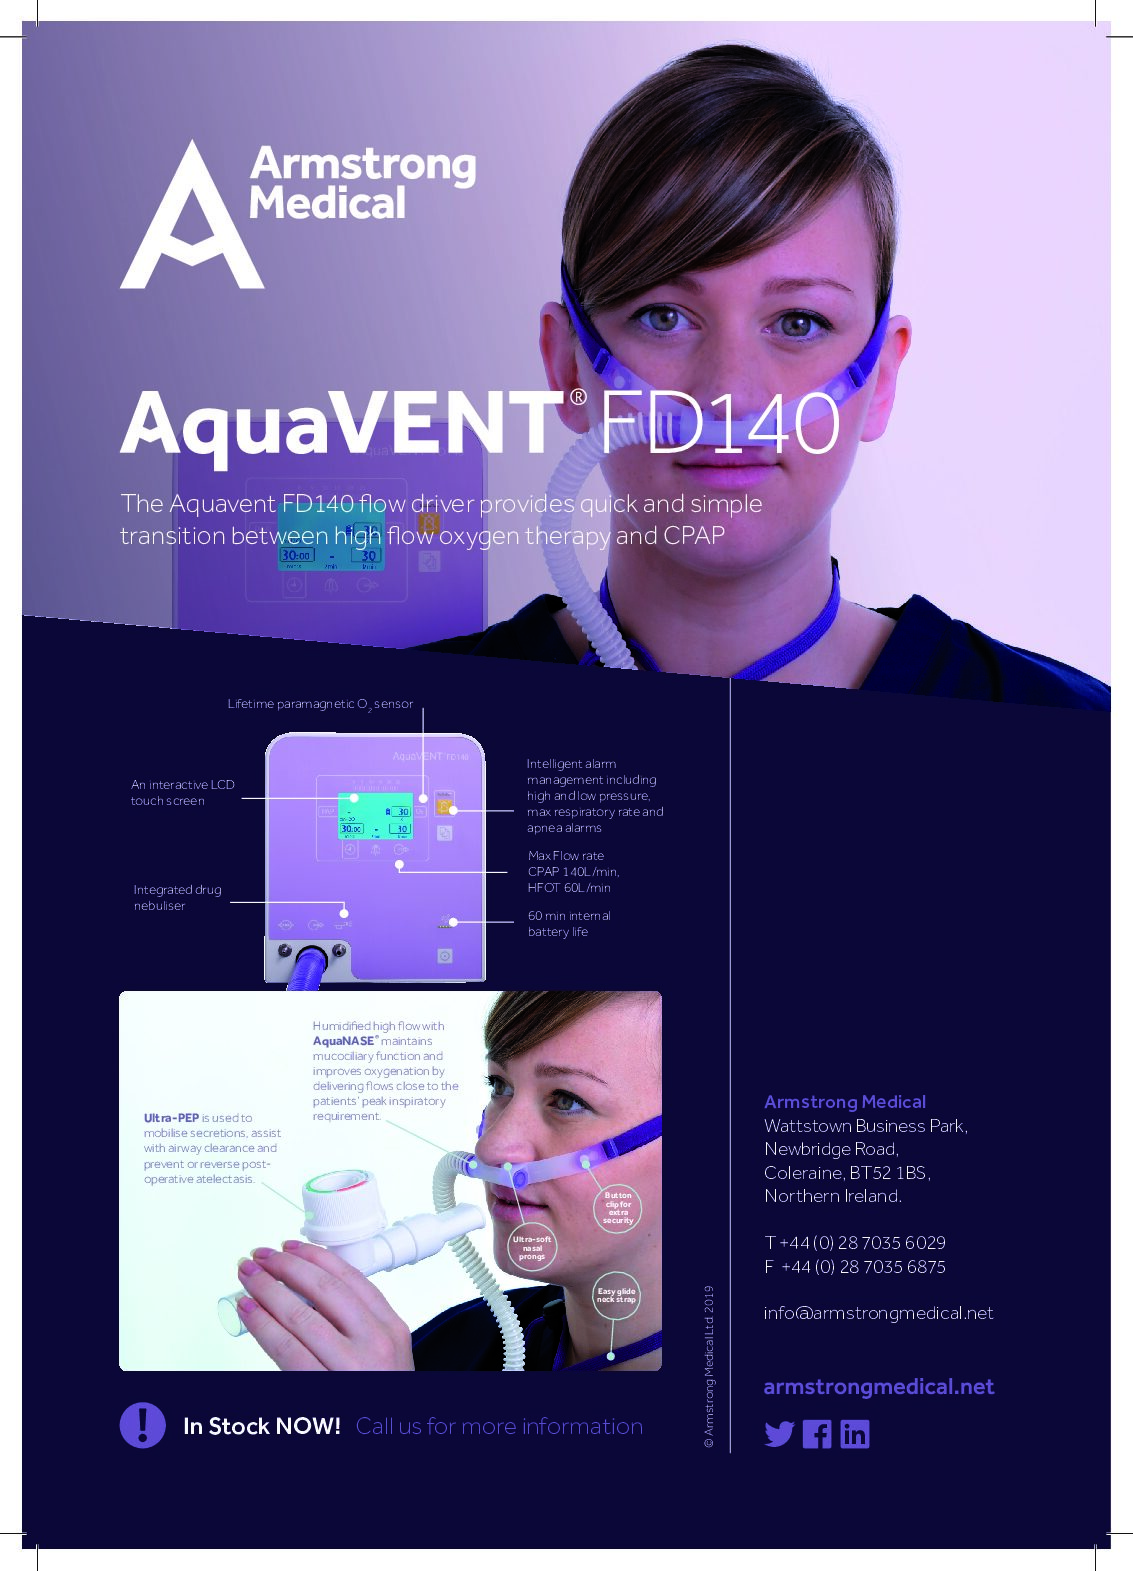 AM AquaVENT FD140 A4 Ad 16974 v1 Final 070119 pdf Armstrong Medical | Medical Device Manufacturer